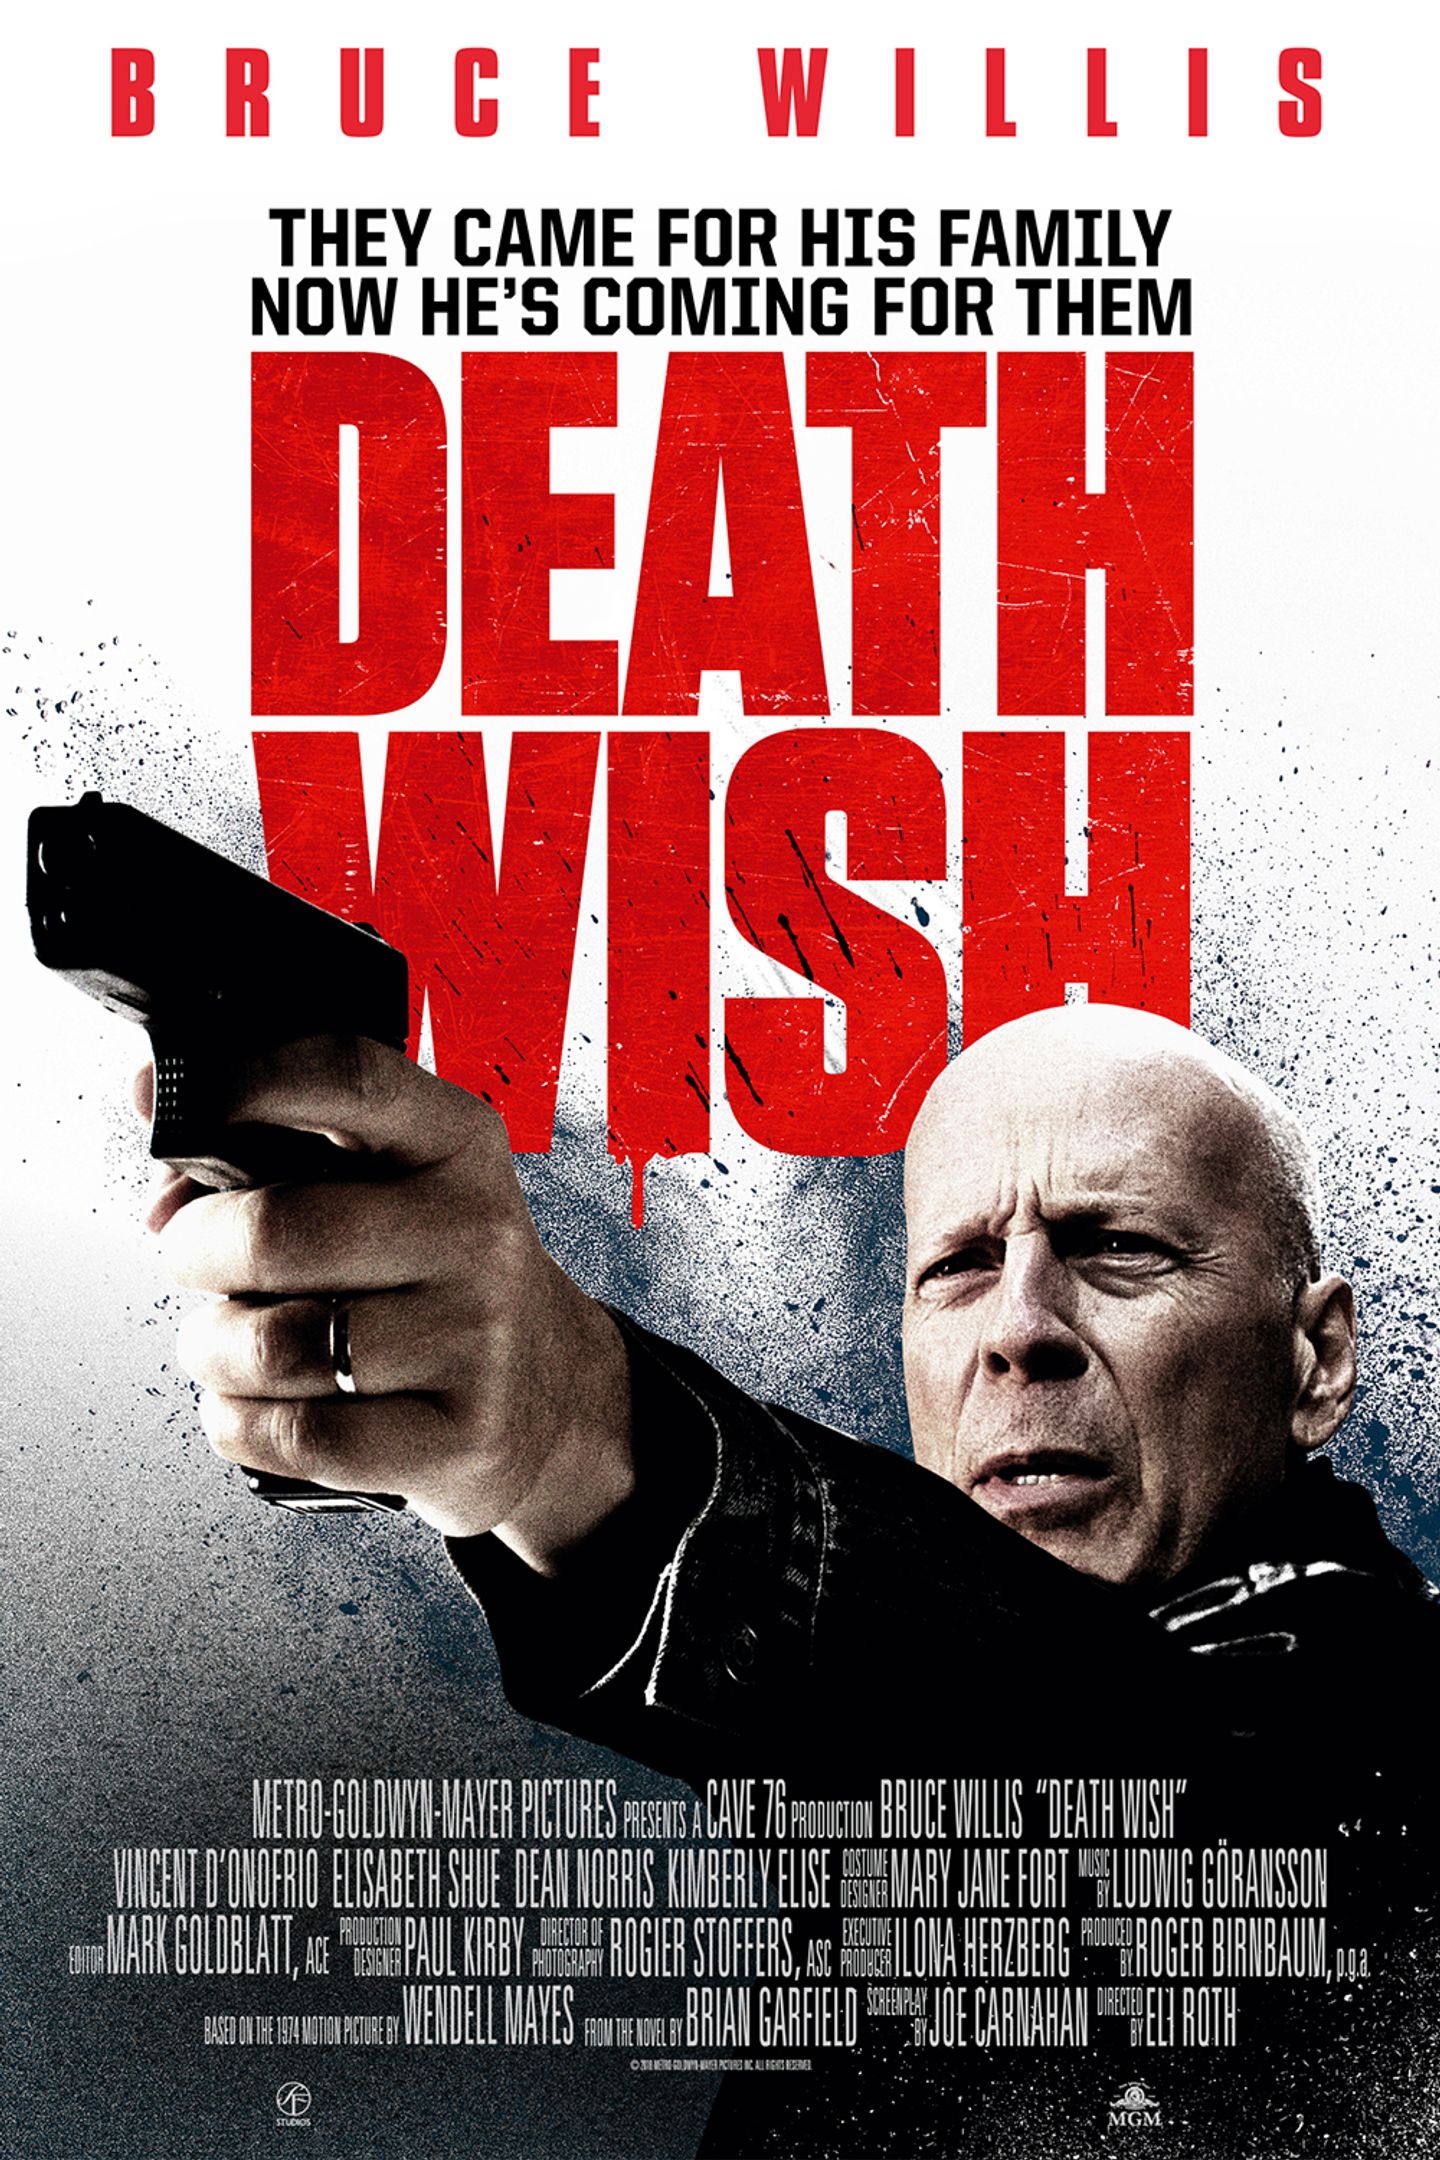 Plakat for 'Death Wish'